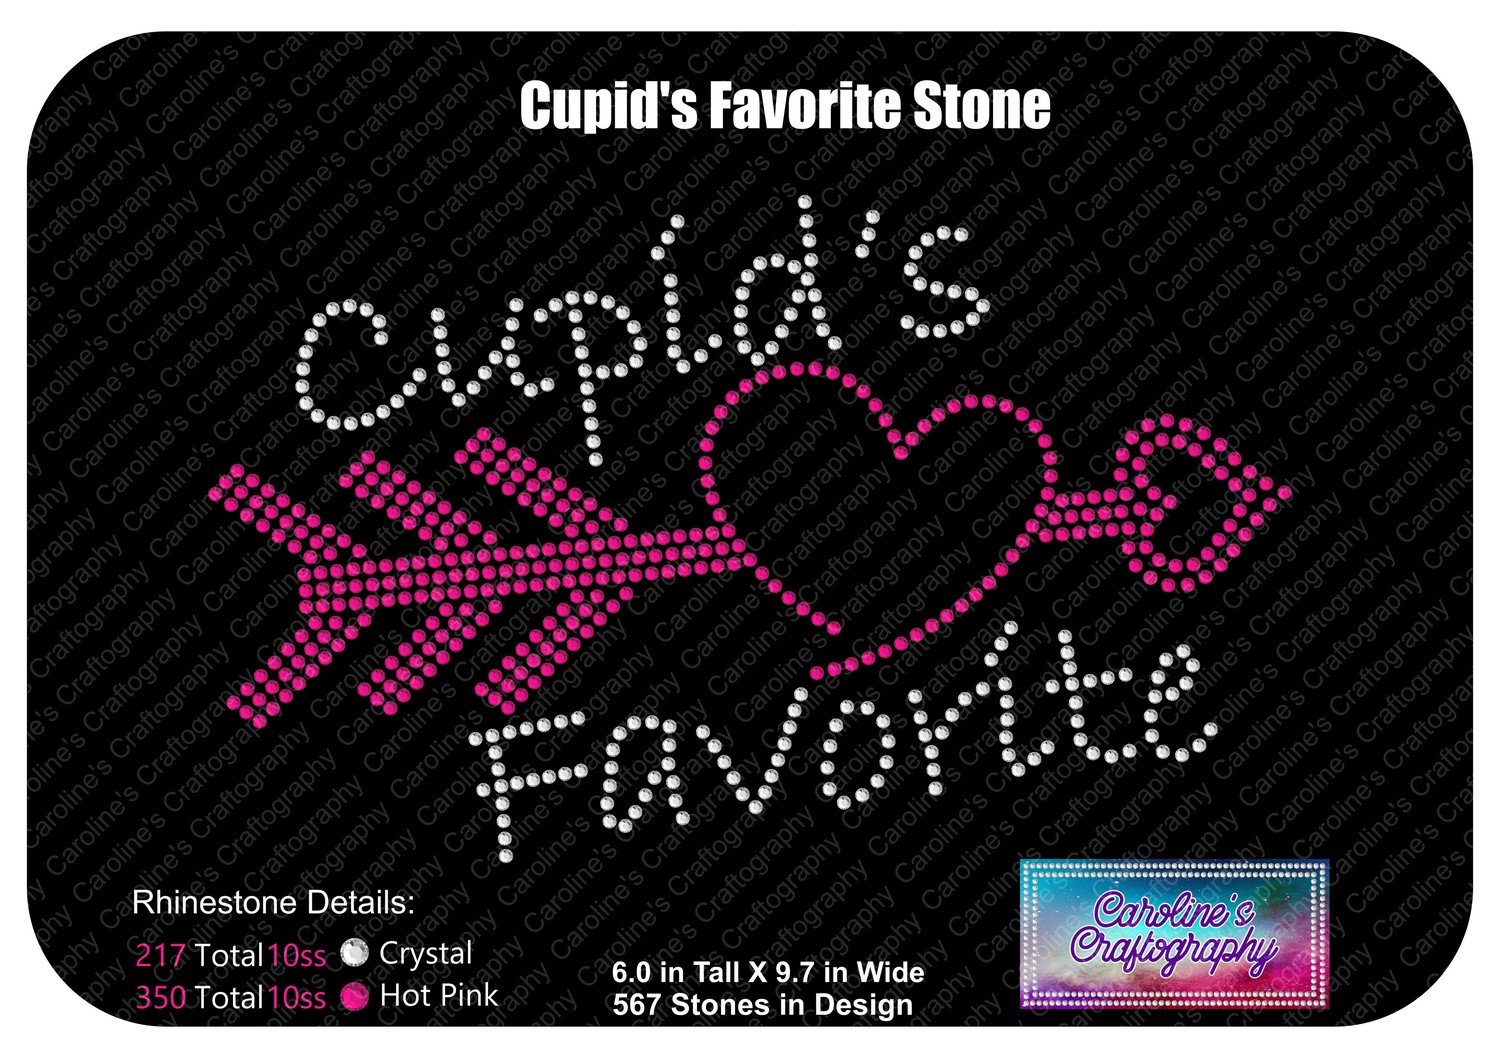 Cupid's Favorite Stone